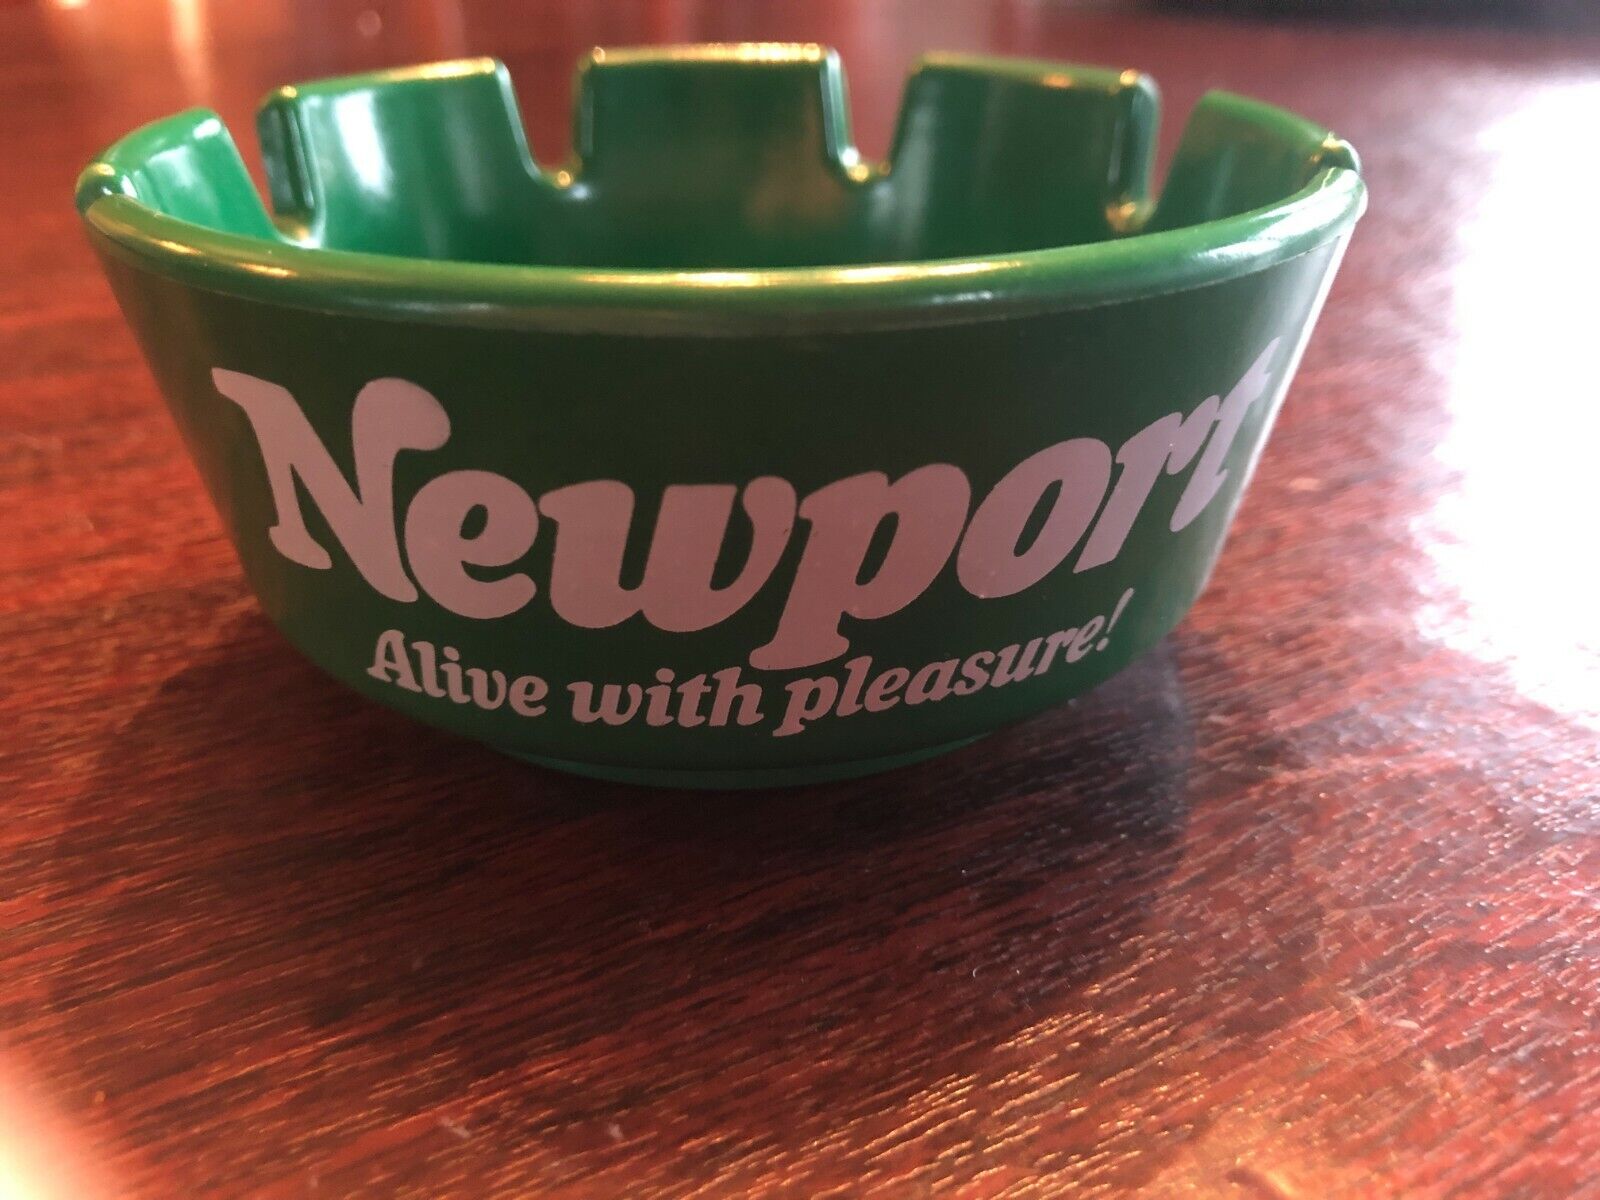 Vintage Green Newport Ashtray